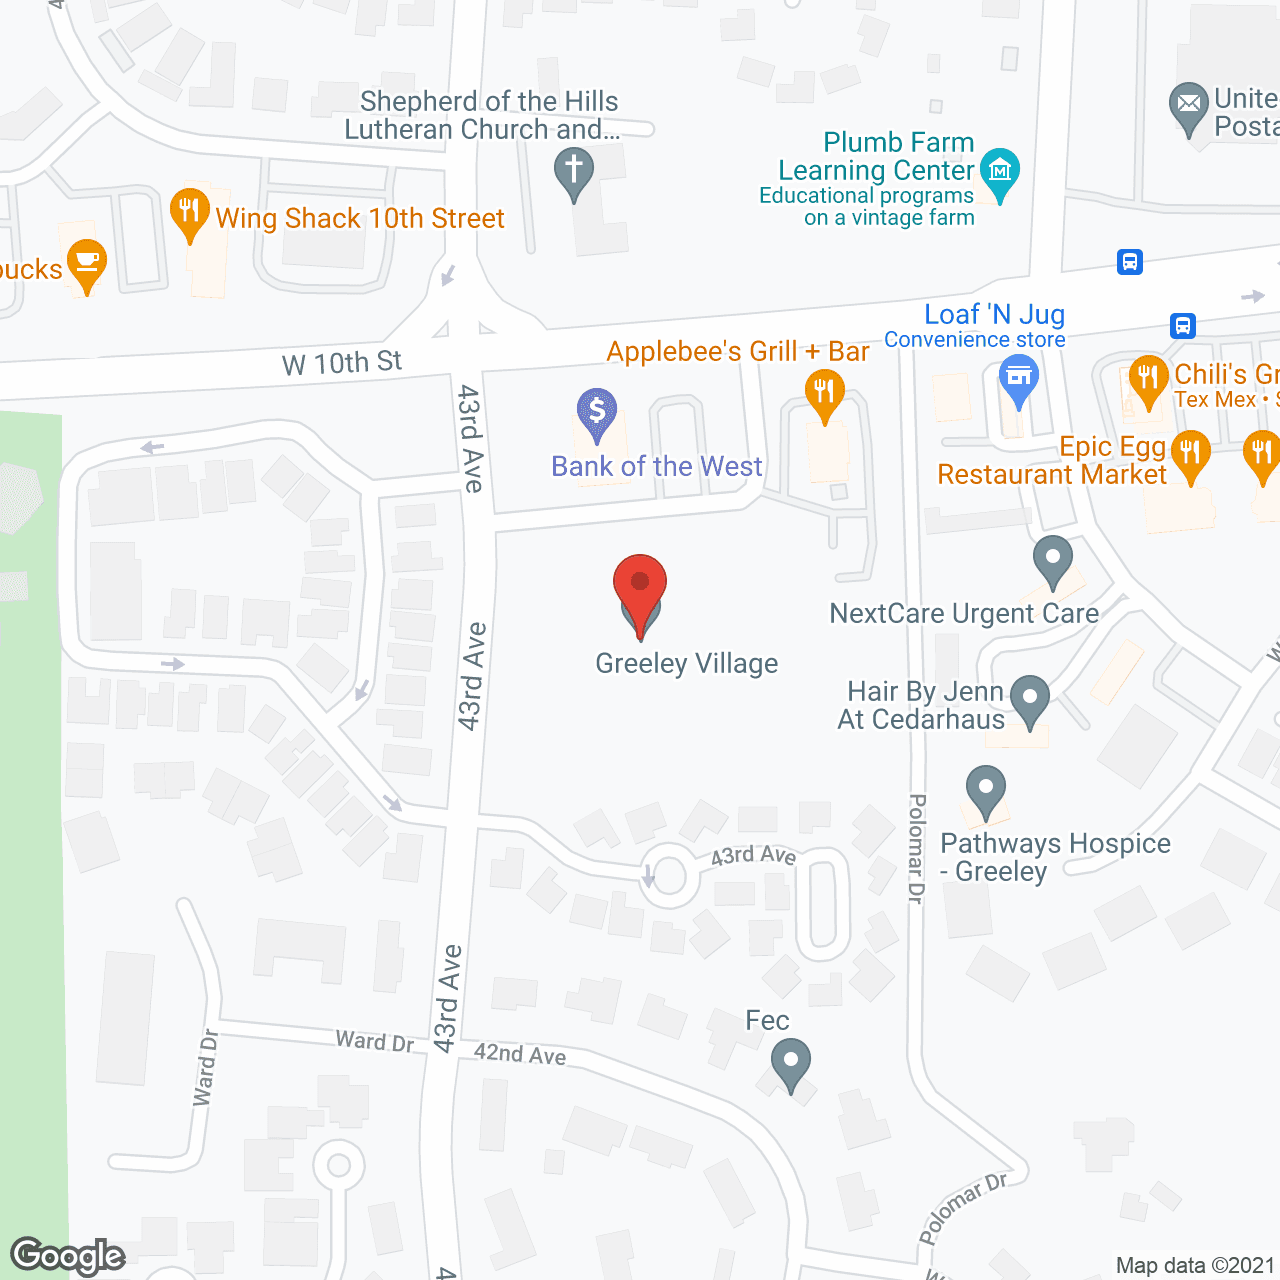 Greeley Village in google map